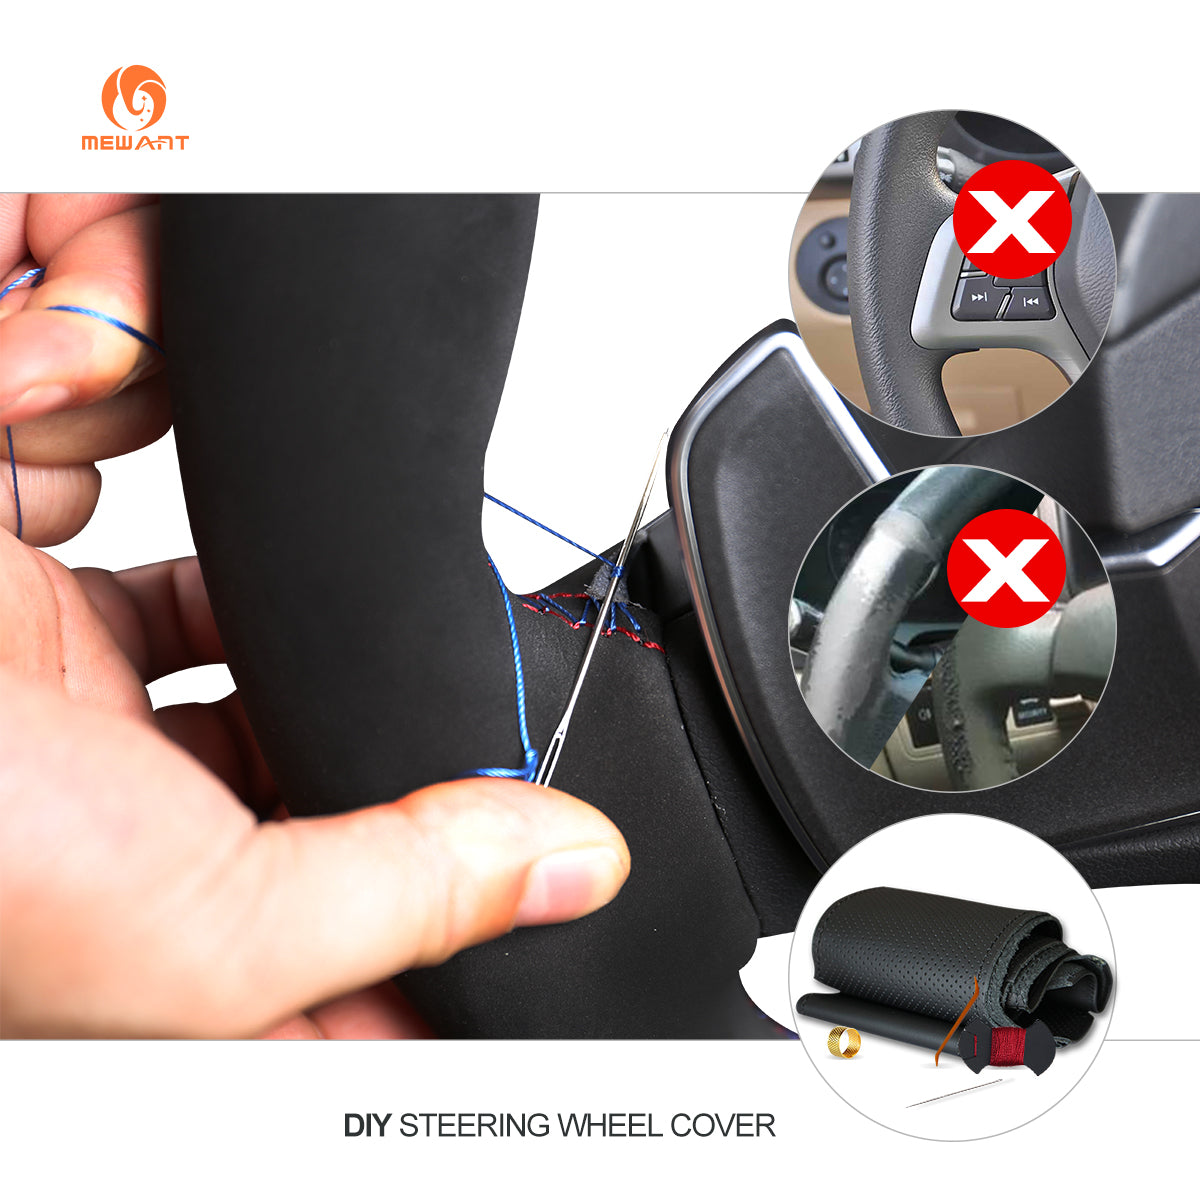 MEWANT Hand Stitch Car Steering Wheel Cover for Mercedes Benz  CLK-Class W208 C208 / E-Class W210 / G-Class W463